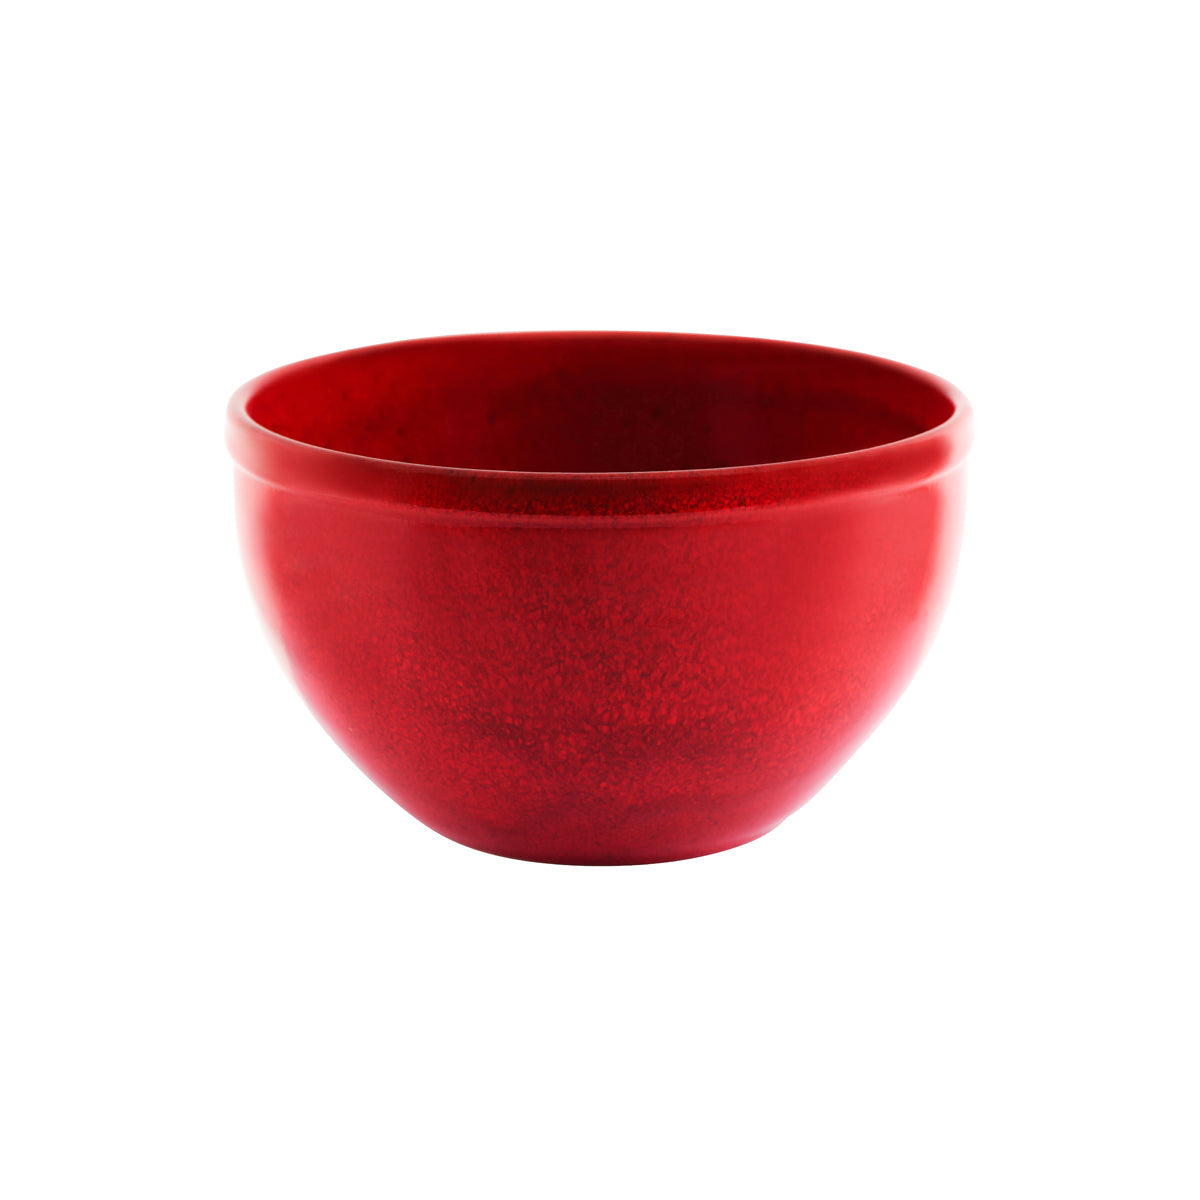 98243 Tablekraft Artistica Reactive Red Mixing Bowl 206mm Tomkin Australia Hospitality Supplies